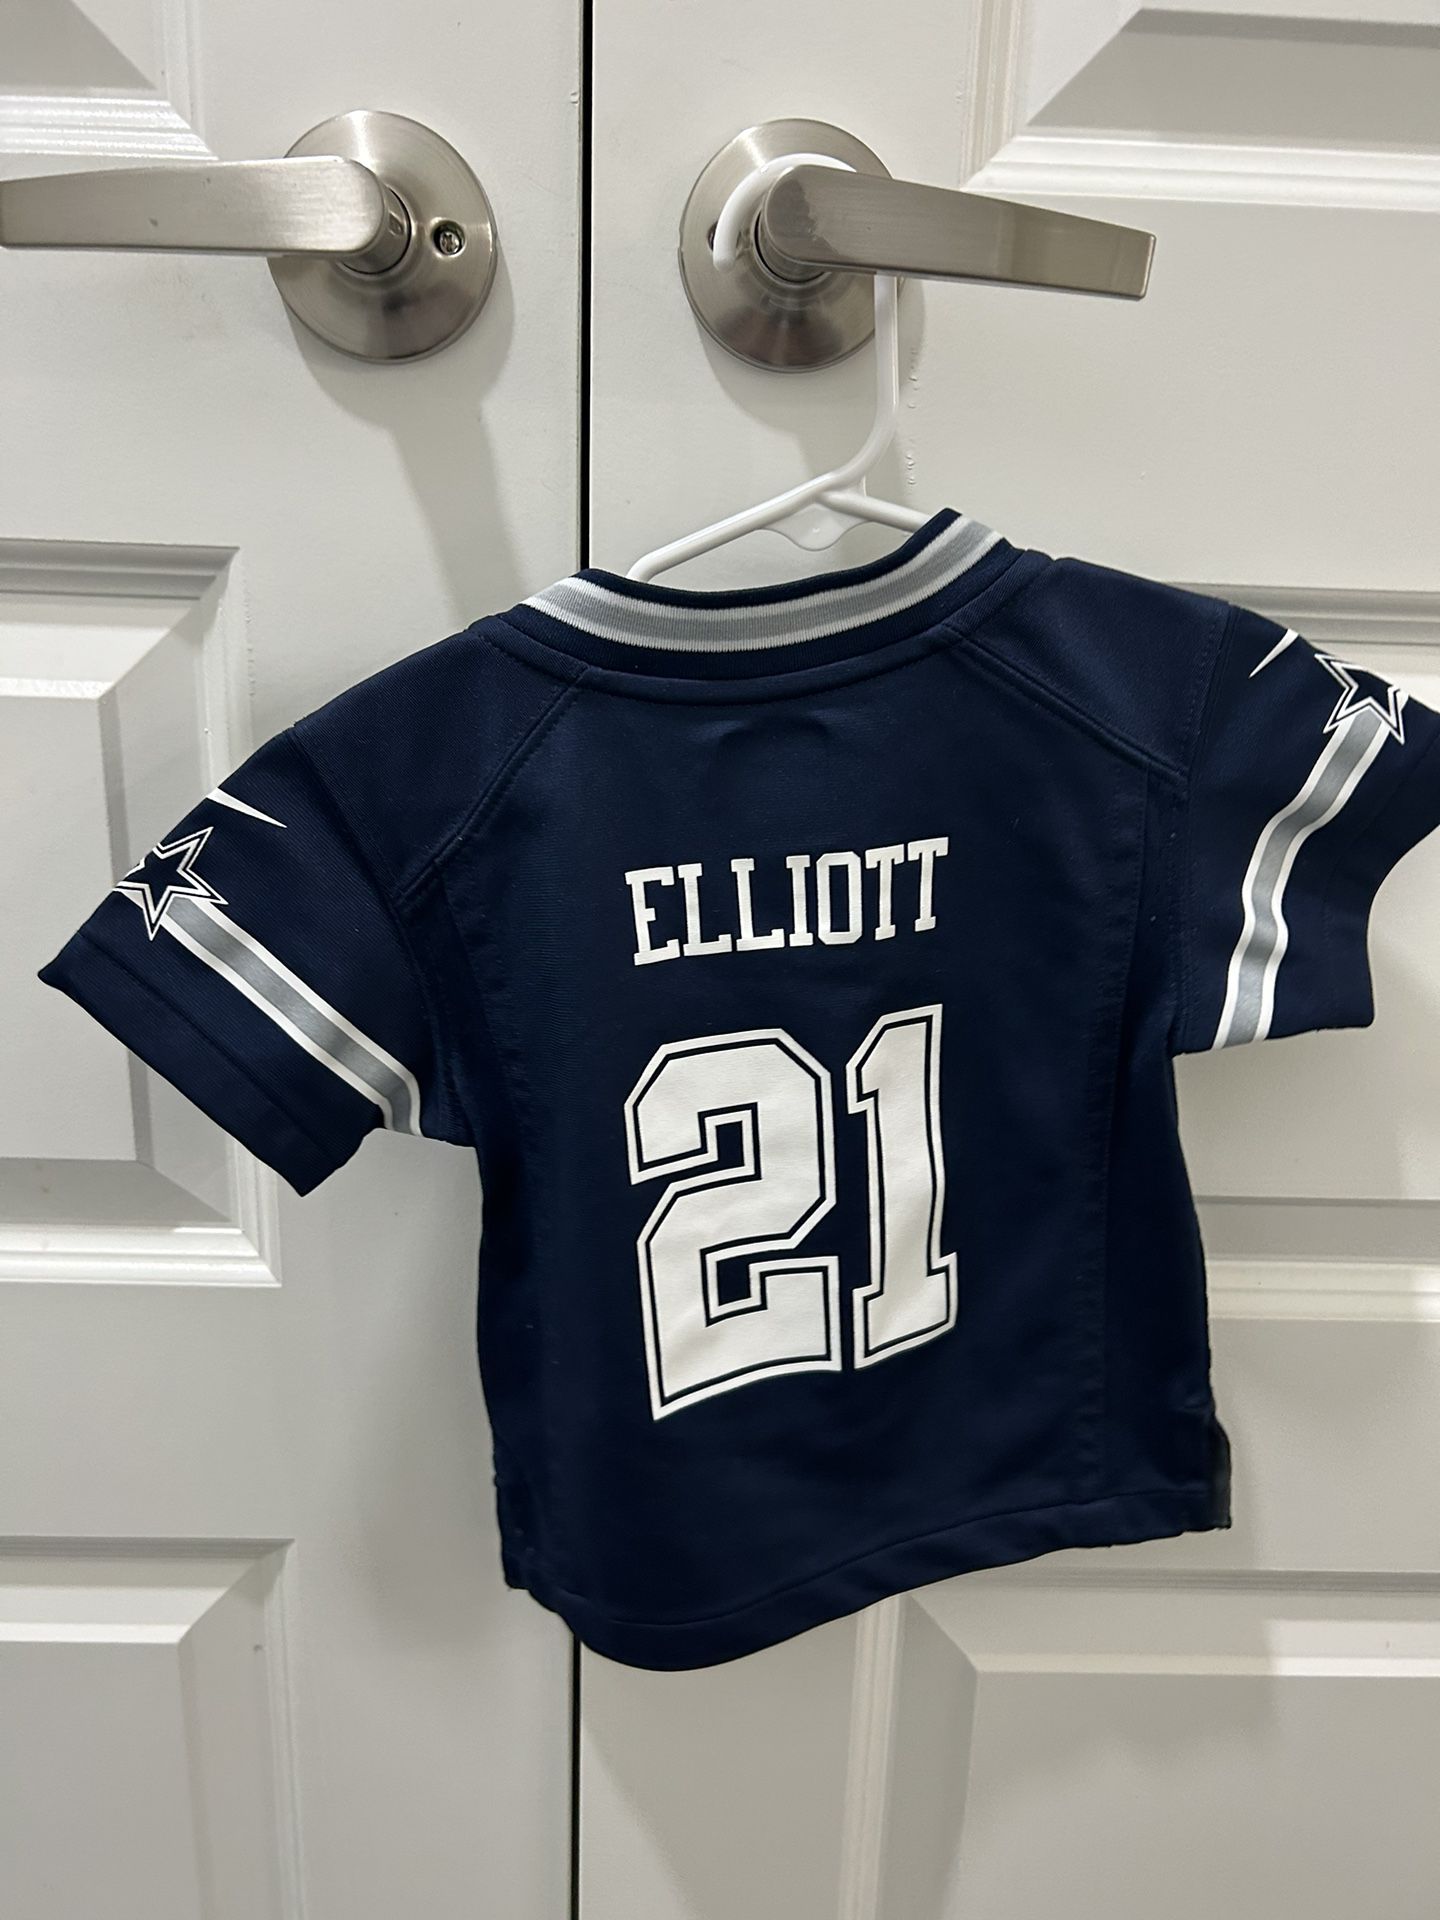 Toddler Dallas Cowboys Jersey for Sale in Edinburg, TX - OfferUp